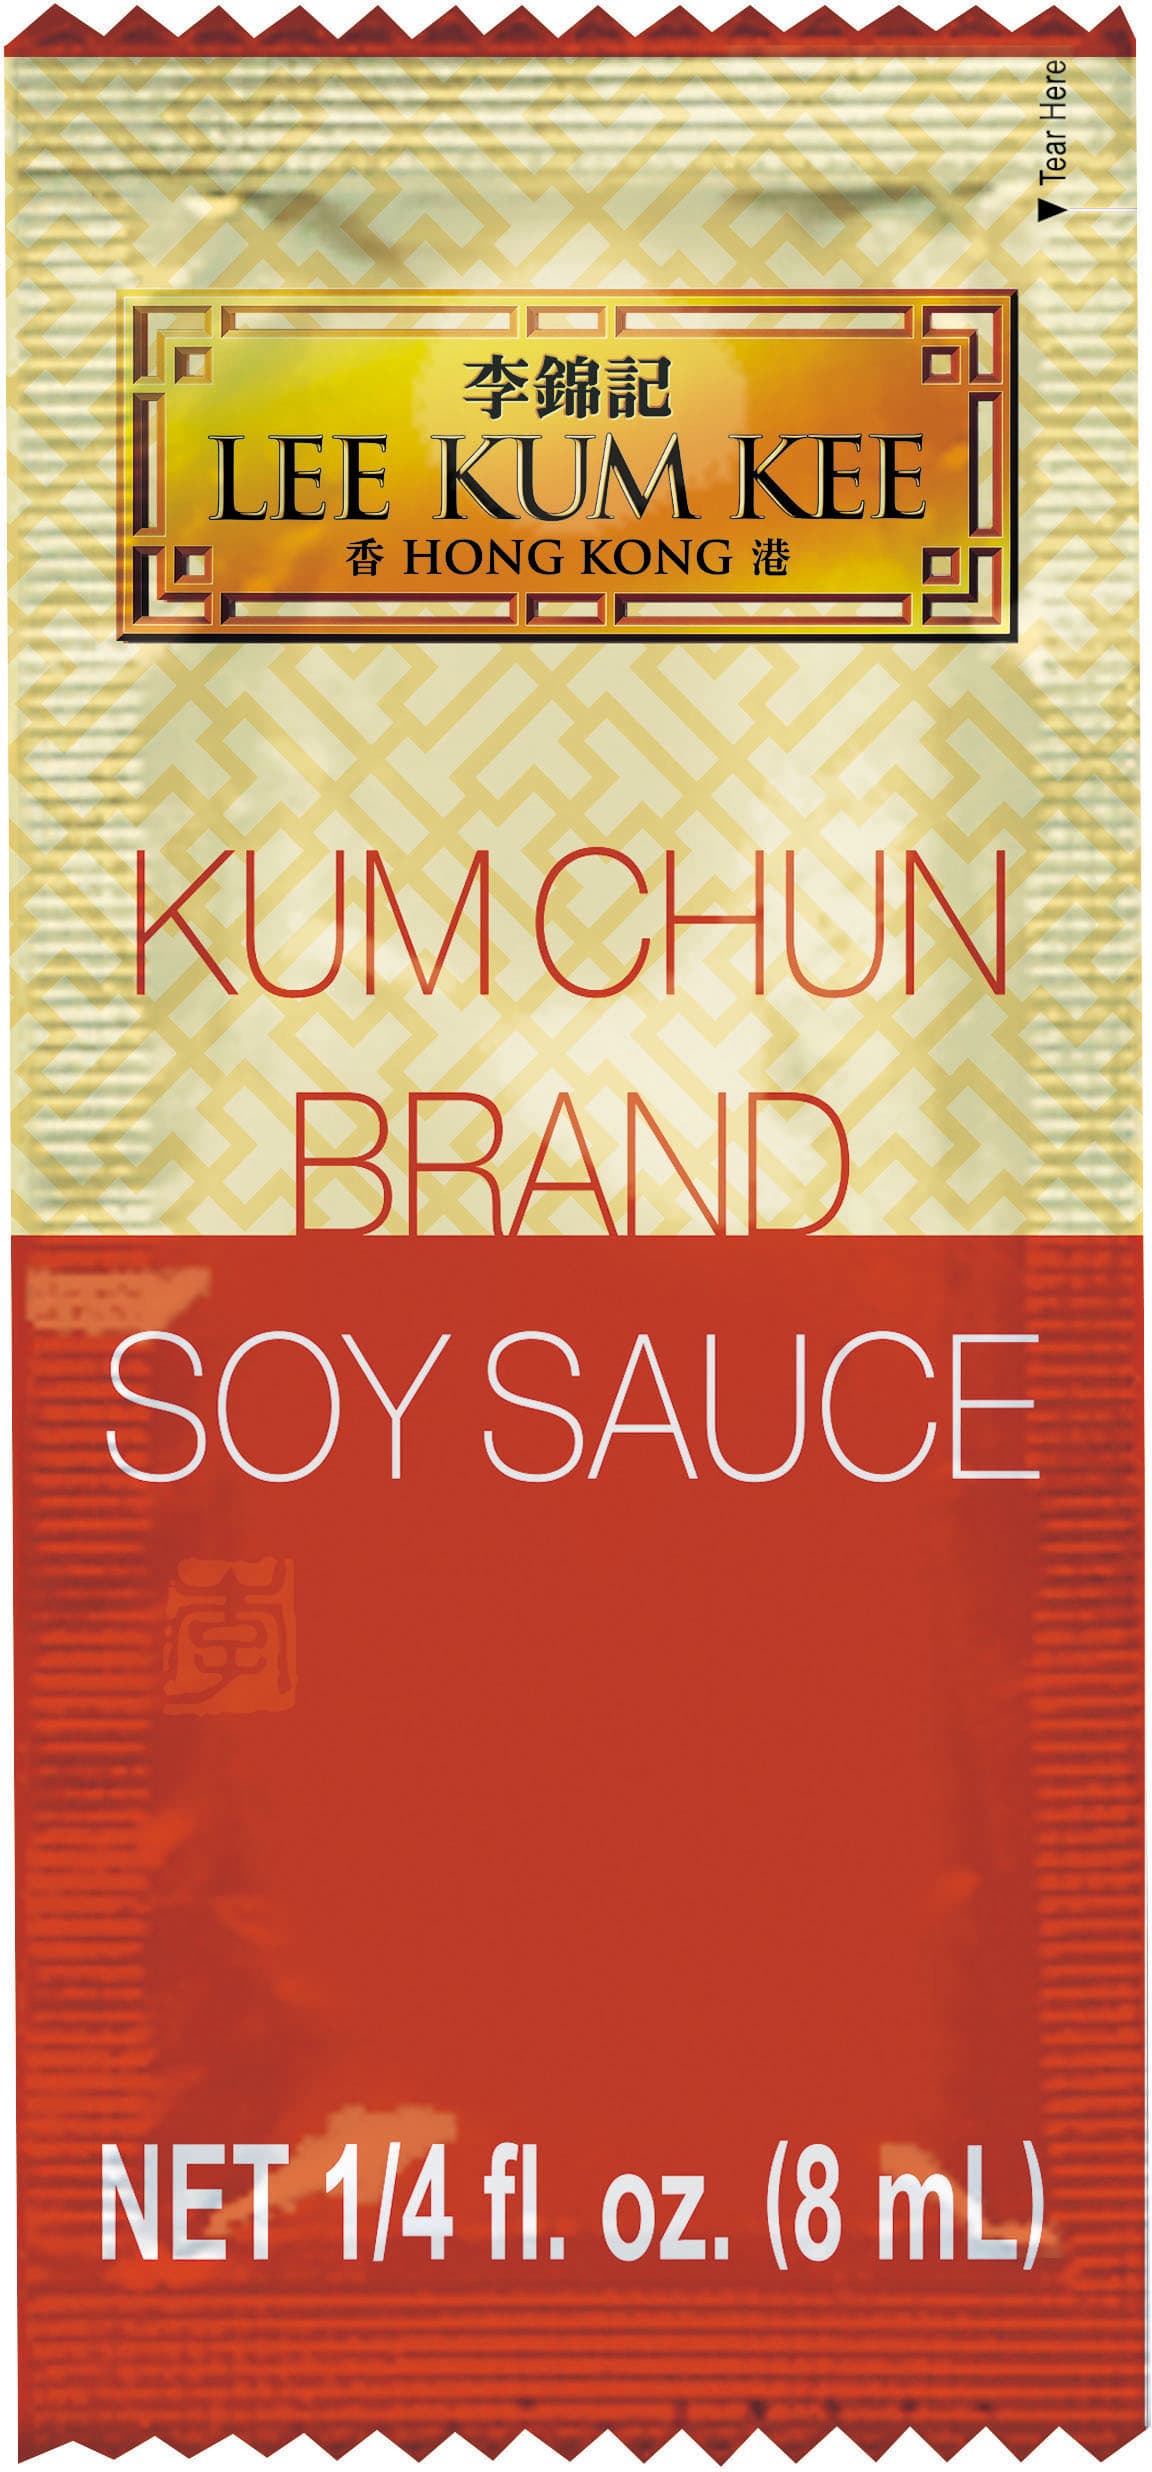 Kum Chun Brand Soy Sauce 8ml 